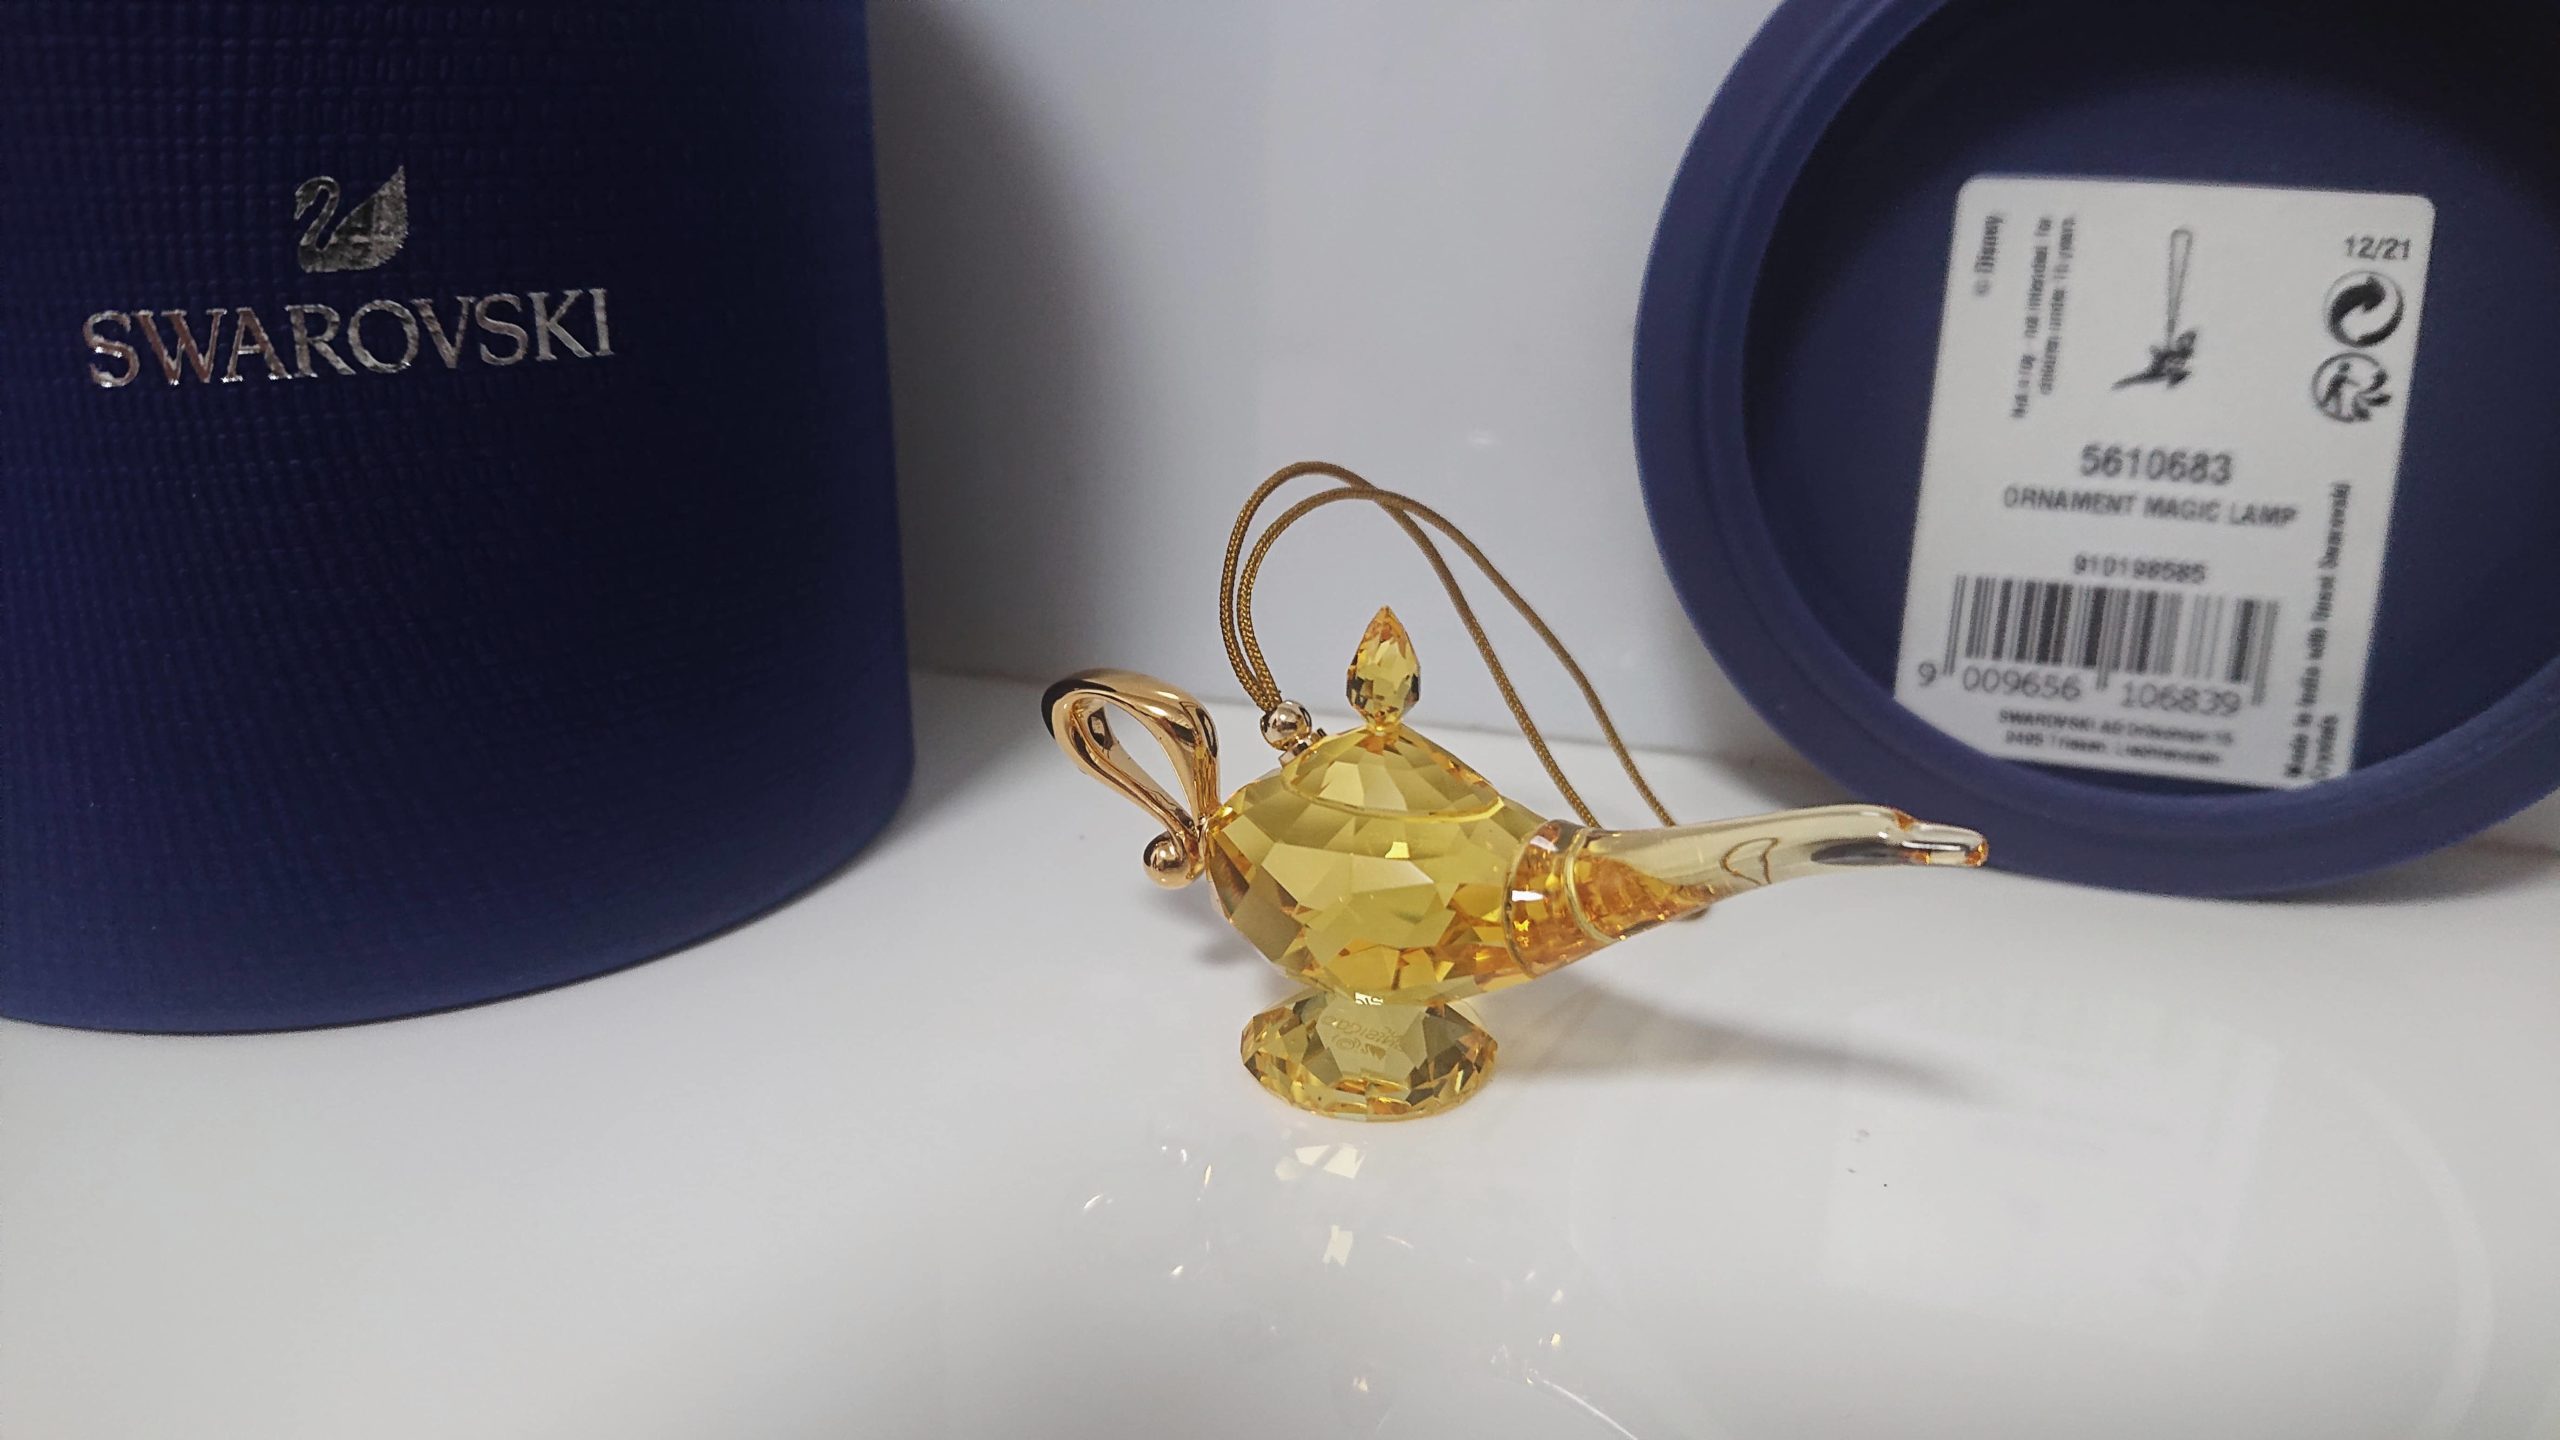 Swarovski Disney Aladdin Wunderlampe Ornament Magic Lamp 5610683 - Sammler  Collectorshop